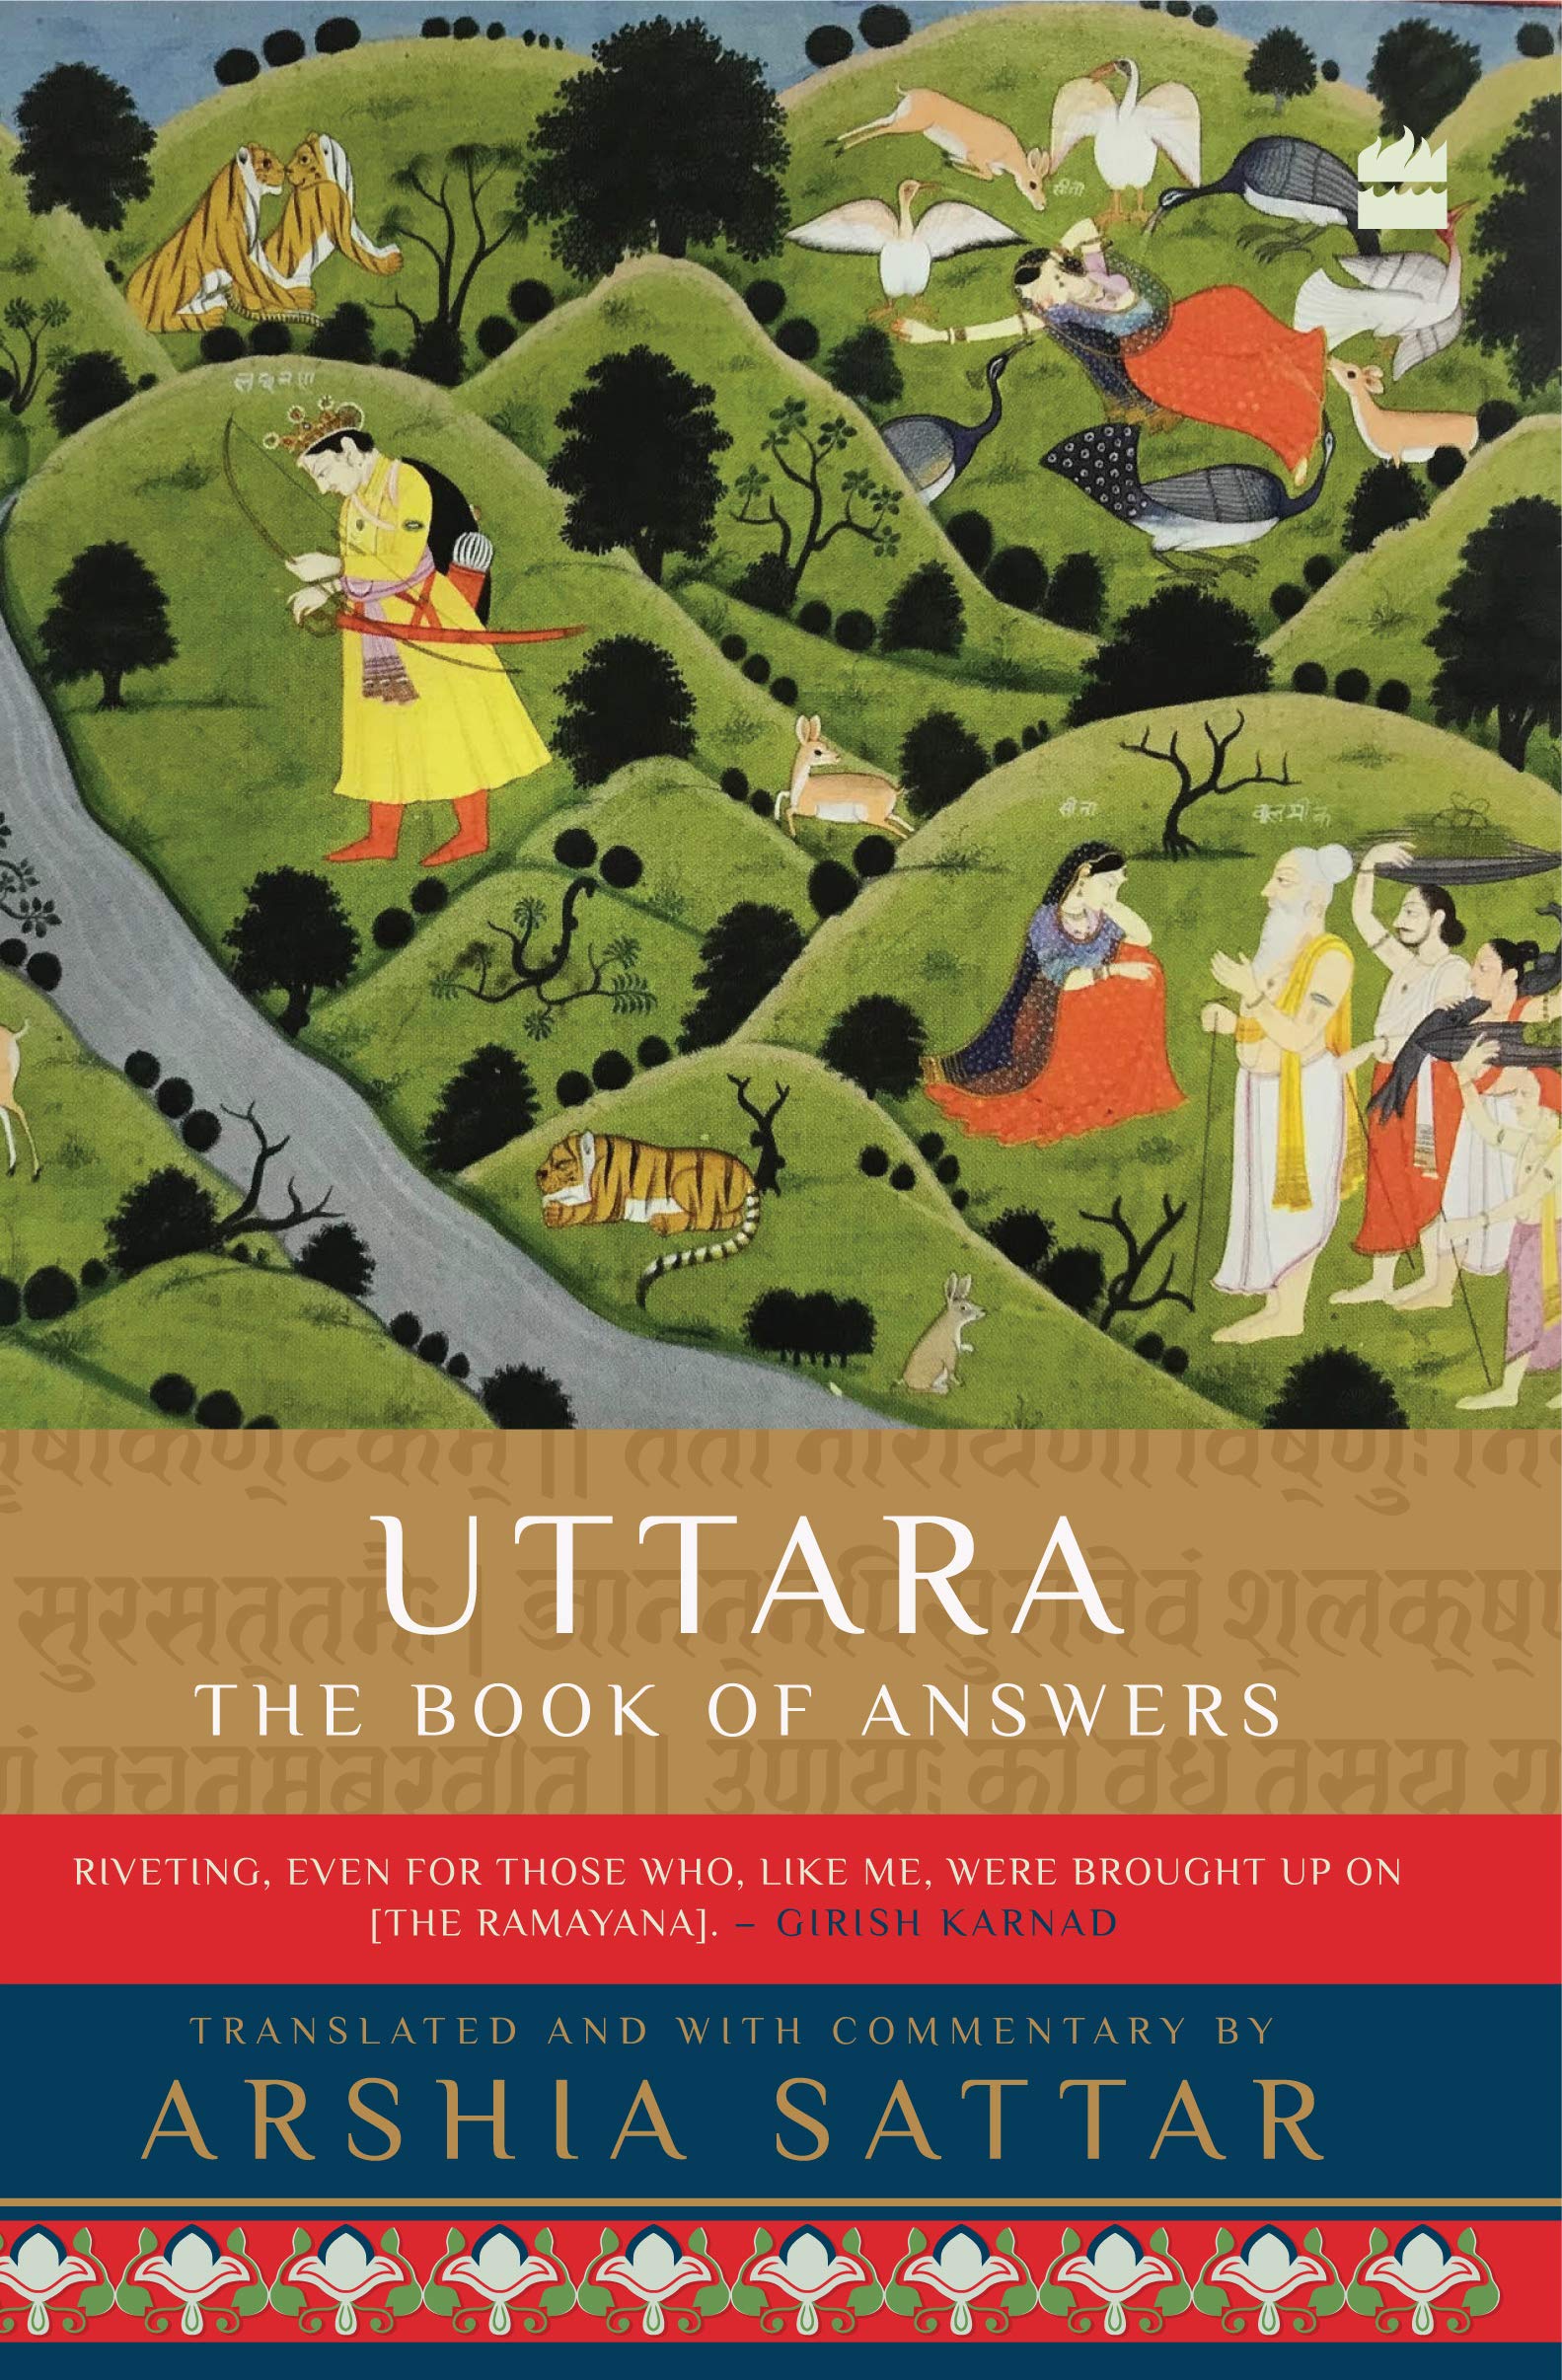 Uttara: The Book of Answers